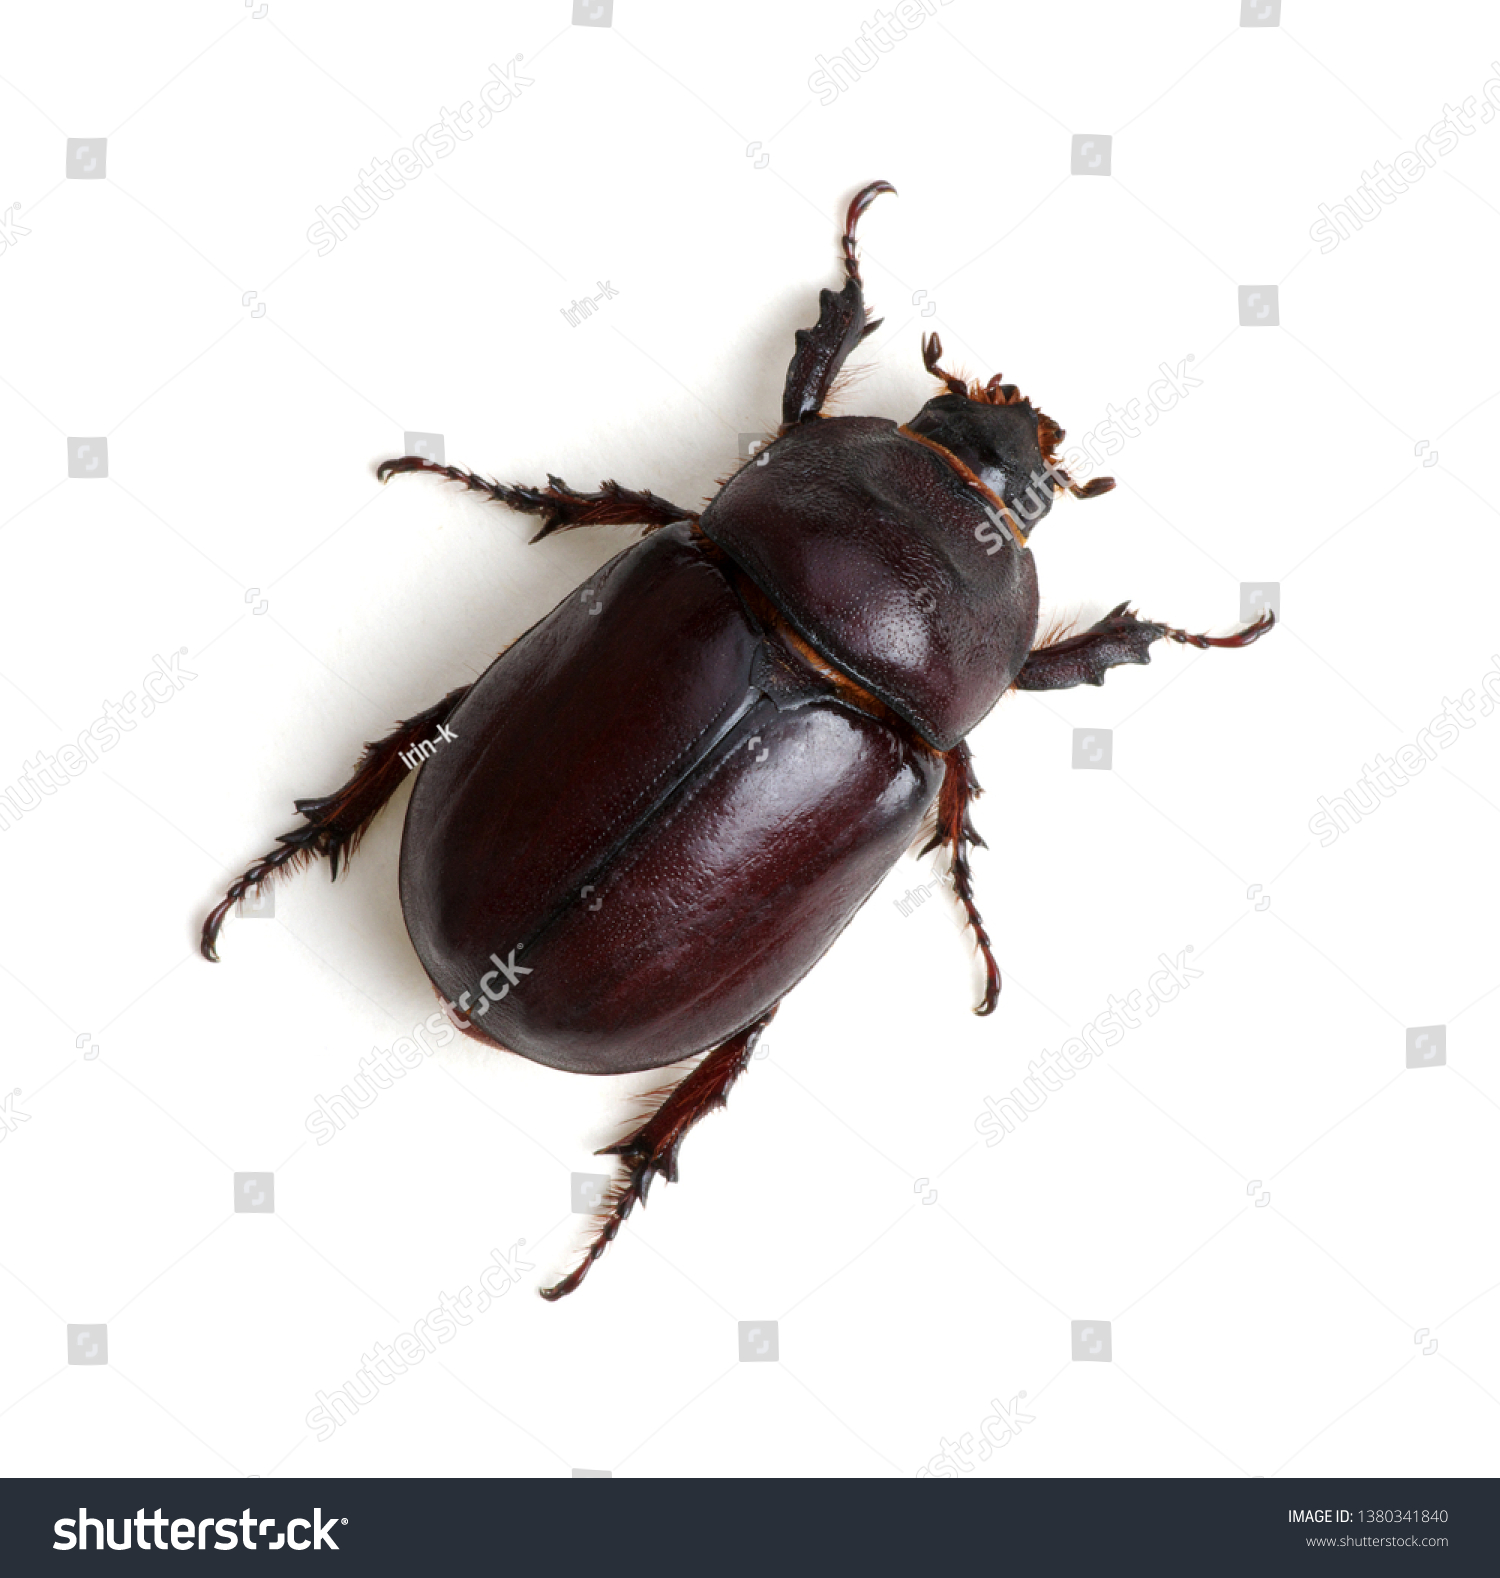 Beetle isolated on white background #1380341840